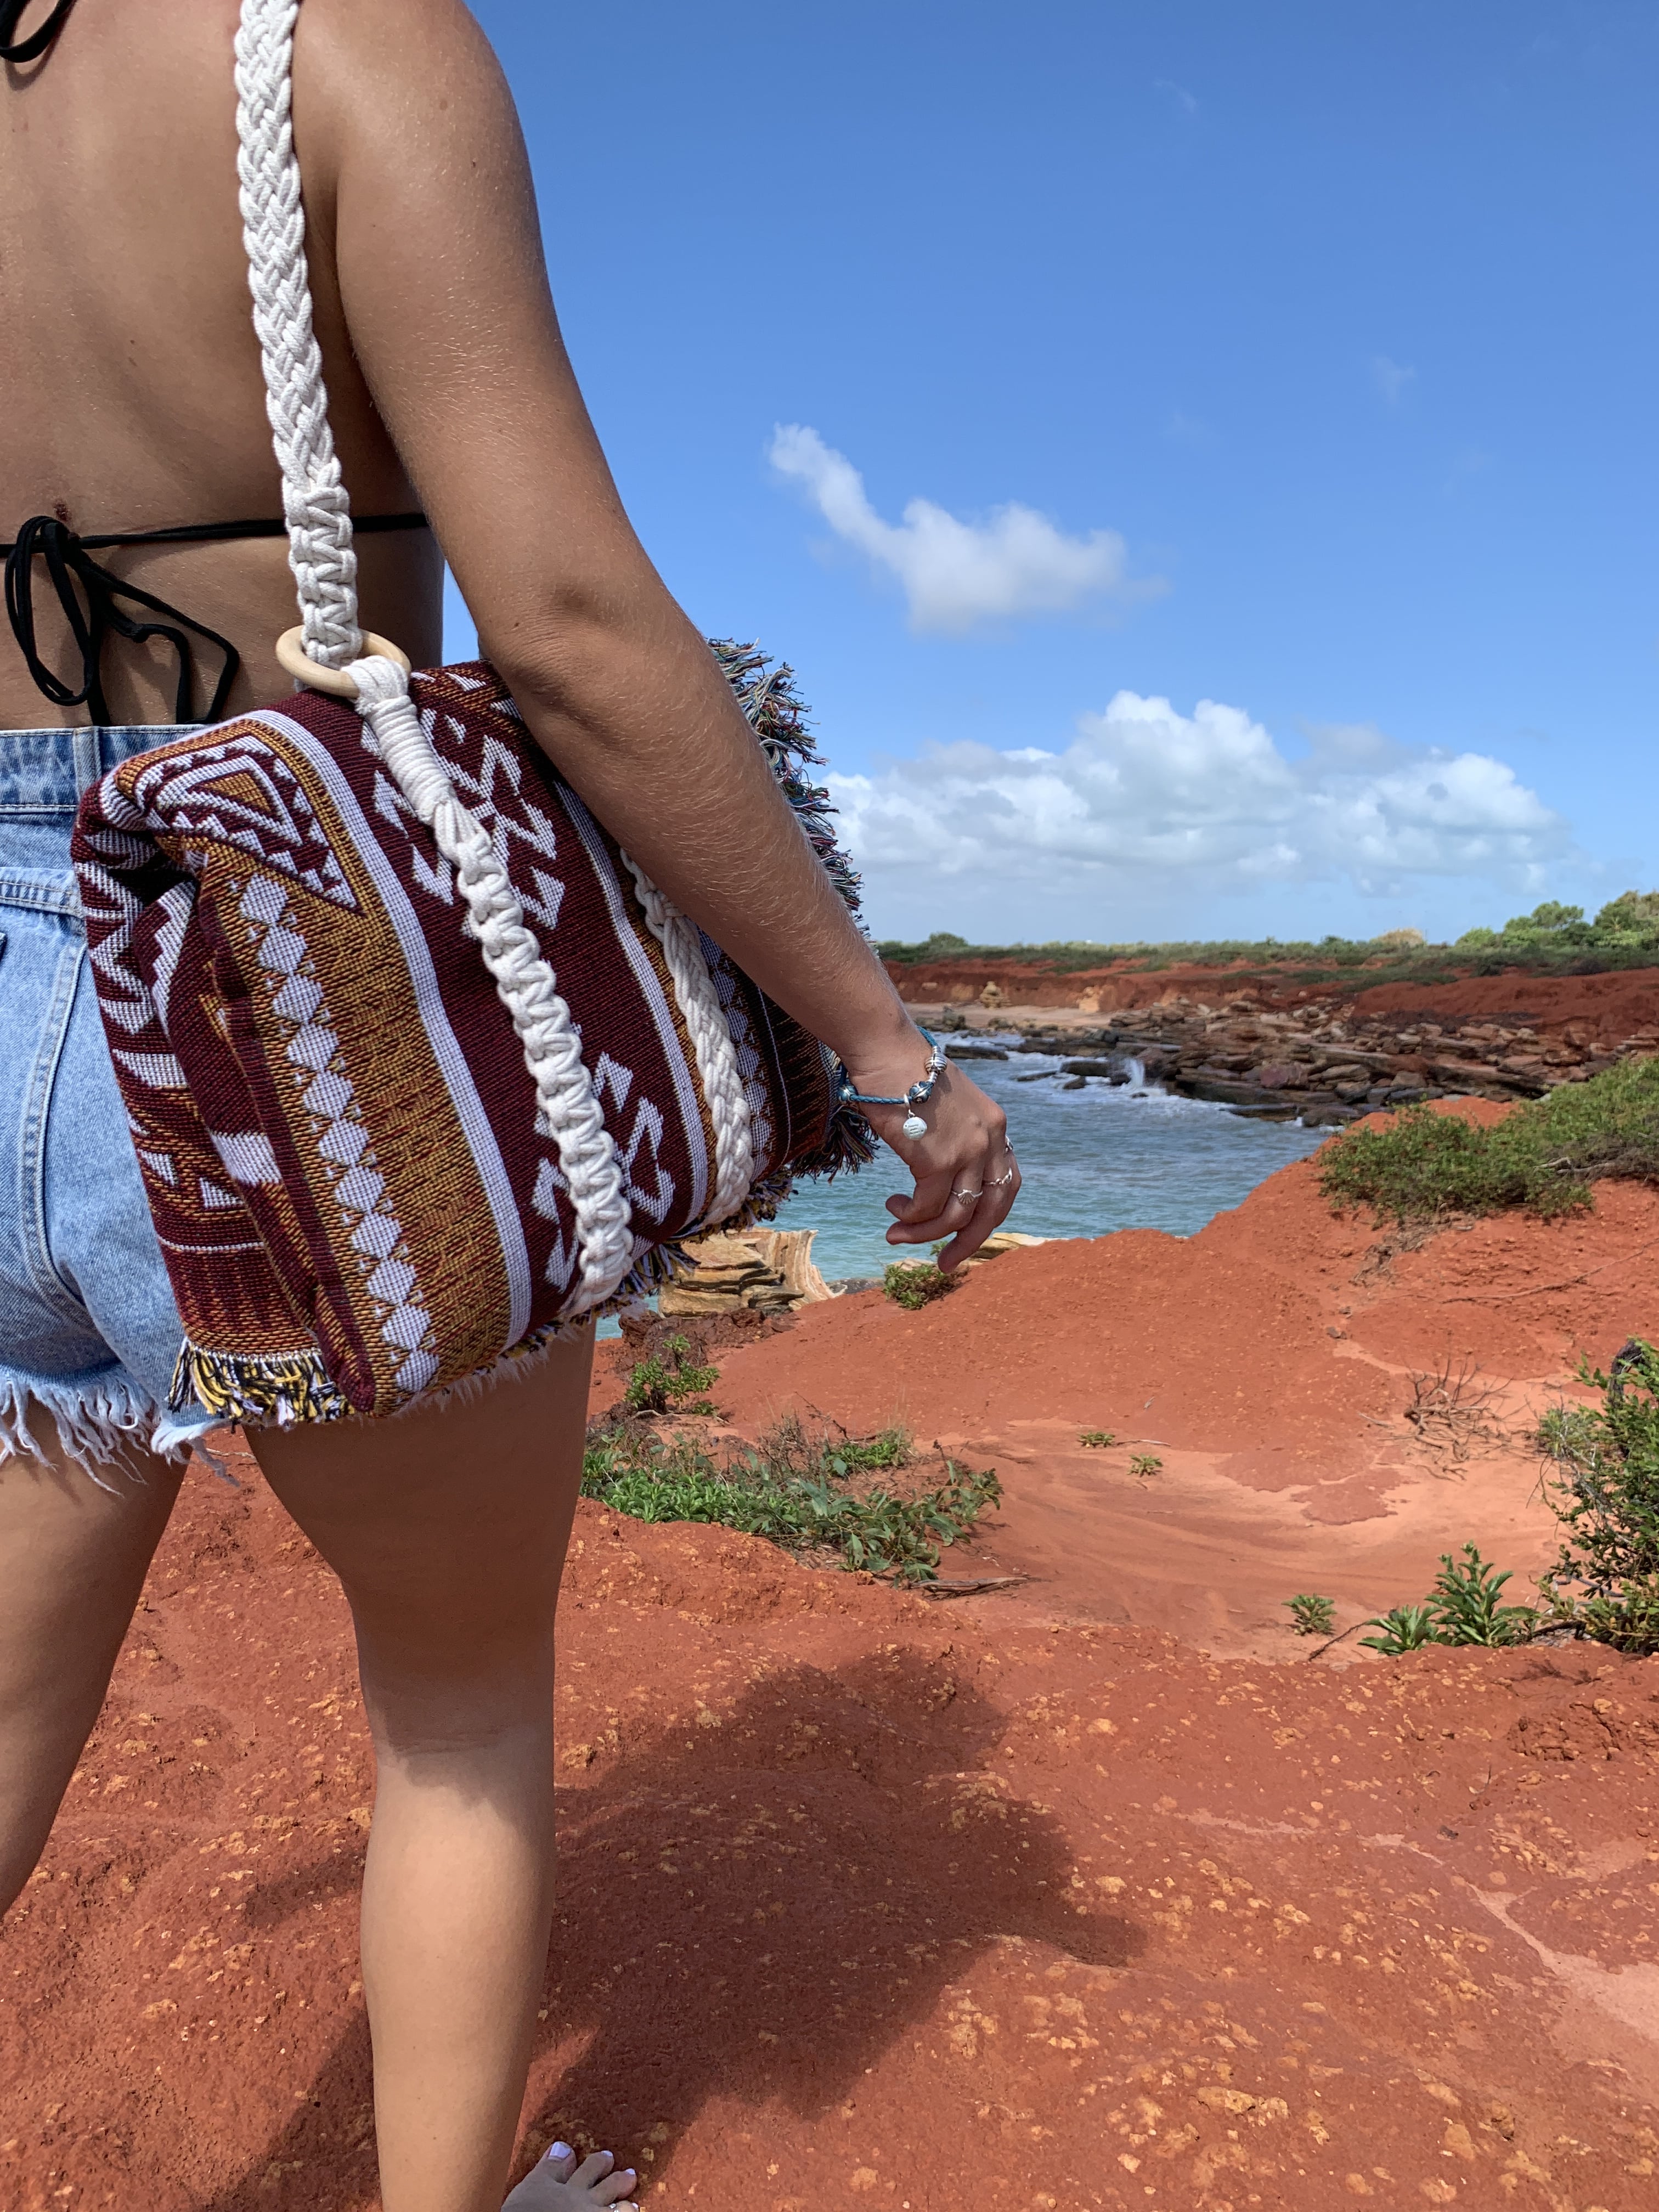 Macramé carry strap wrapped around Desert Night throw rug blanket in Western Australia red dirt overlooking ocean